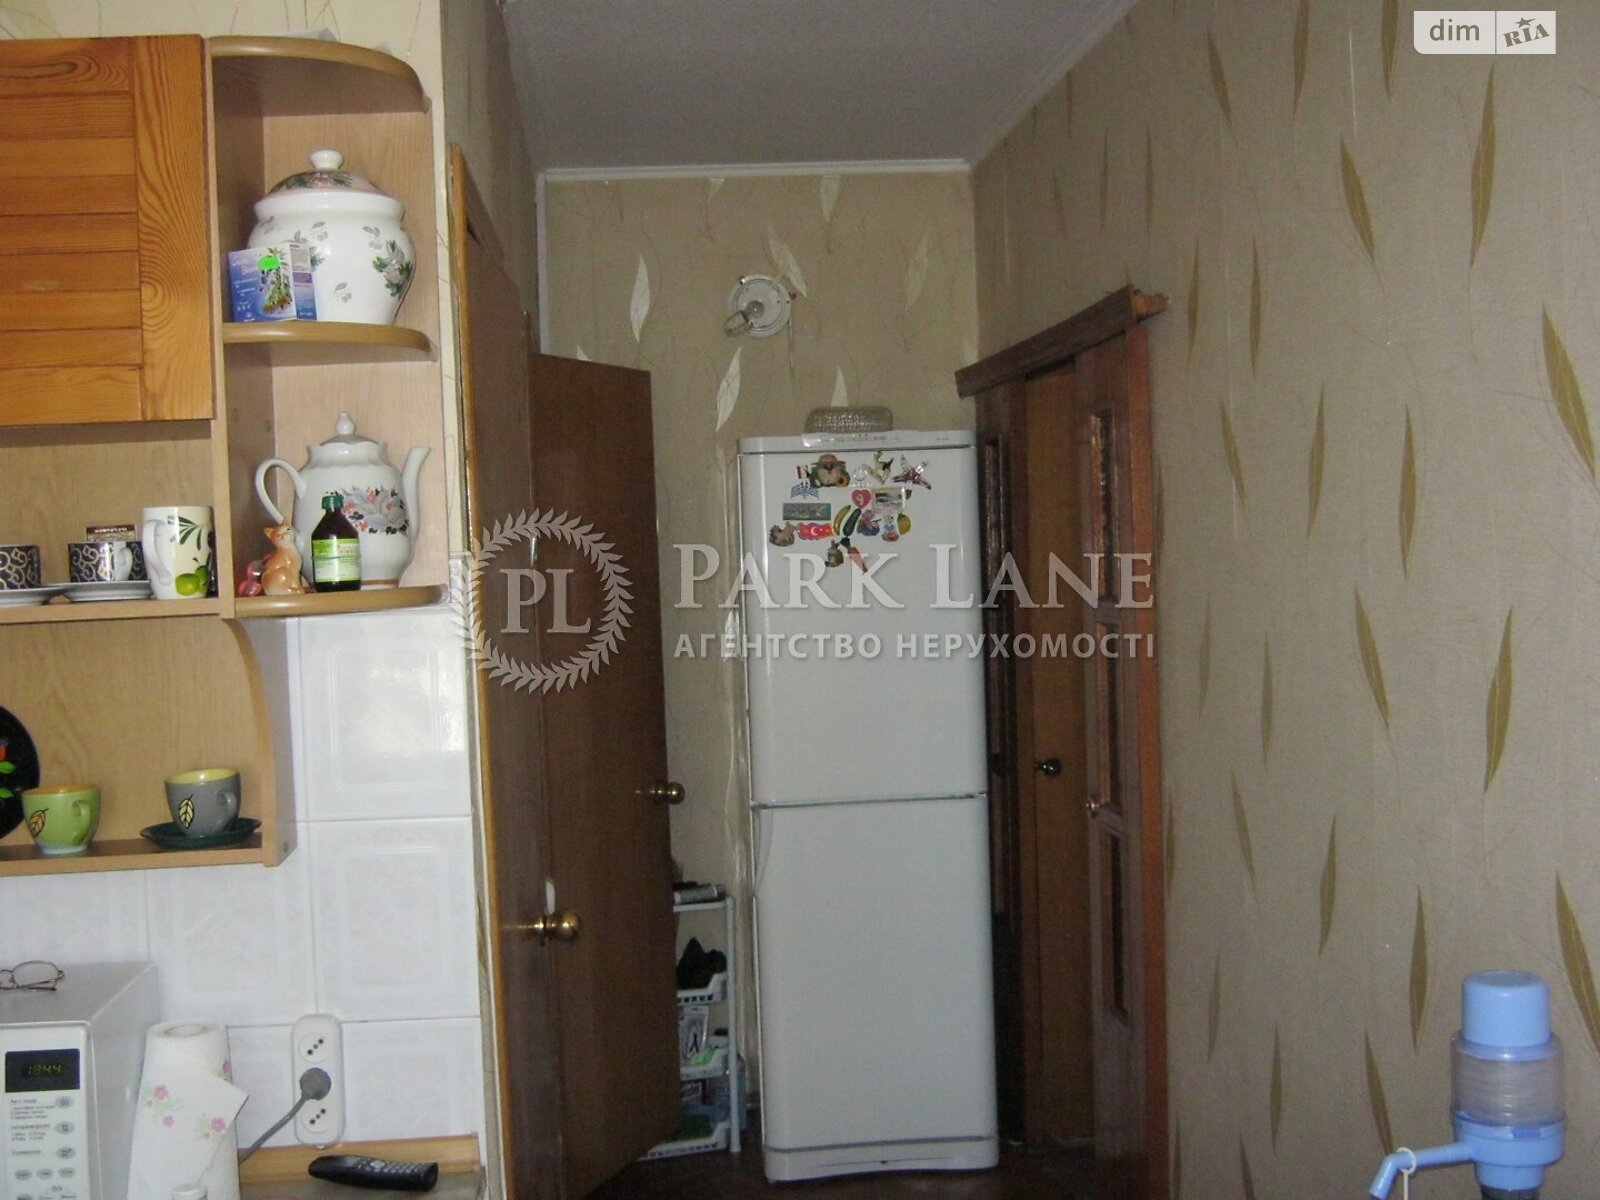 Продажа четырехкомнатной квартиры в Киеве, на ул. Петра Панча 11, район Оболонский фото 1